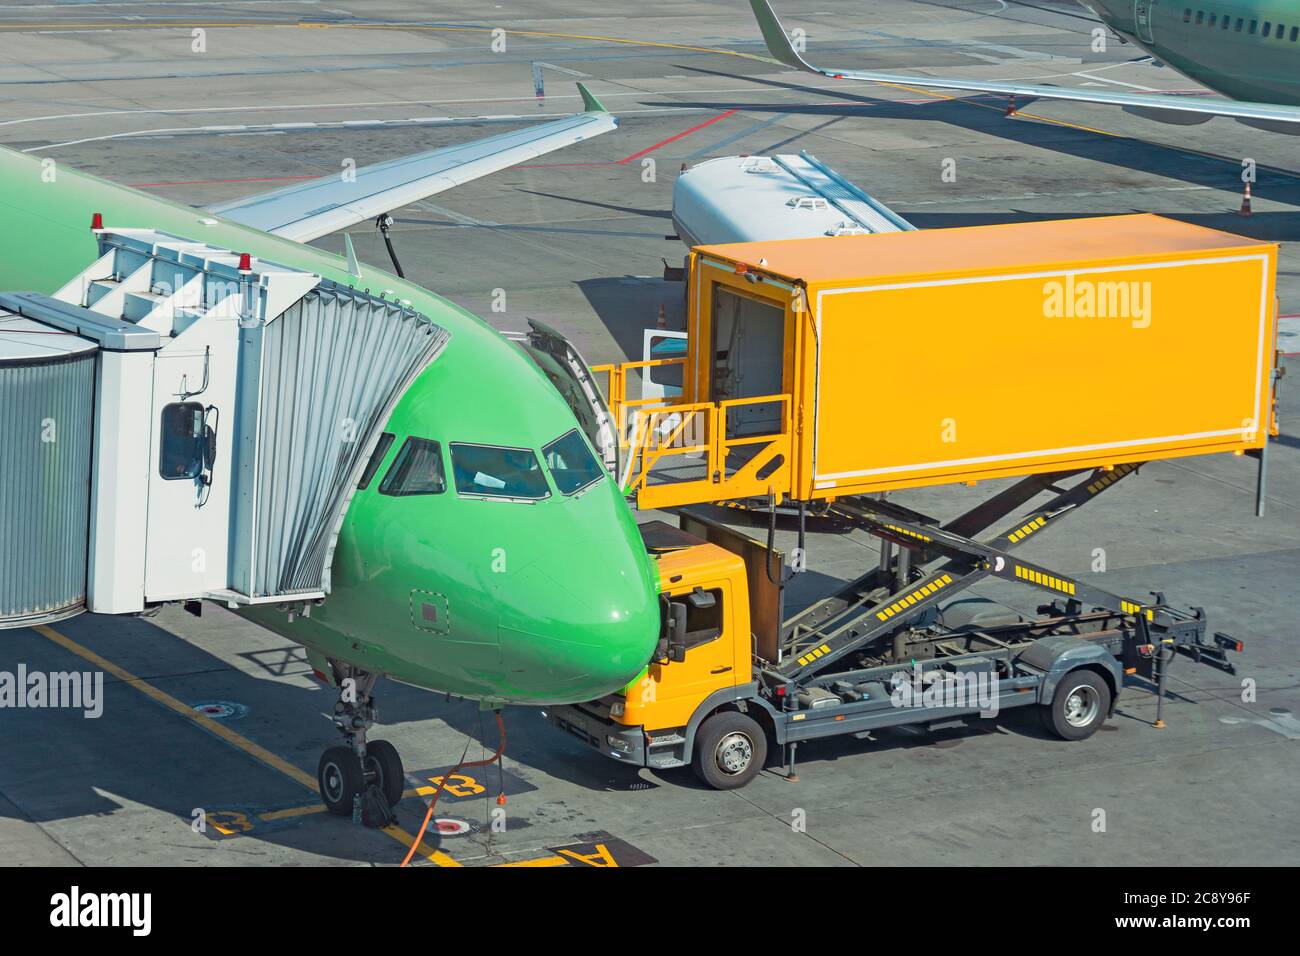 Yellow truck next to a passenger plane, pre flight service airport Stock Photo